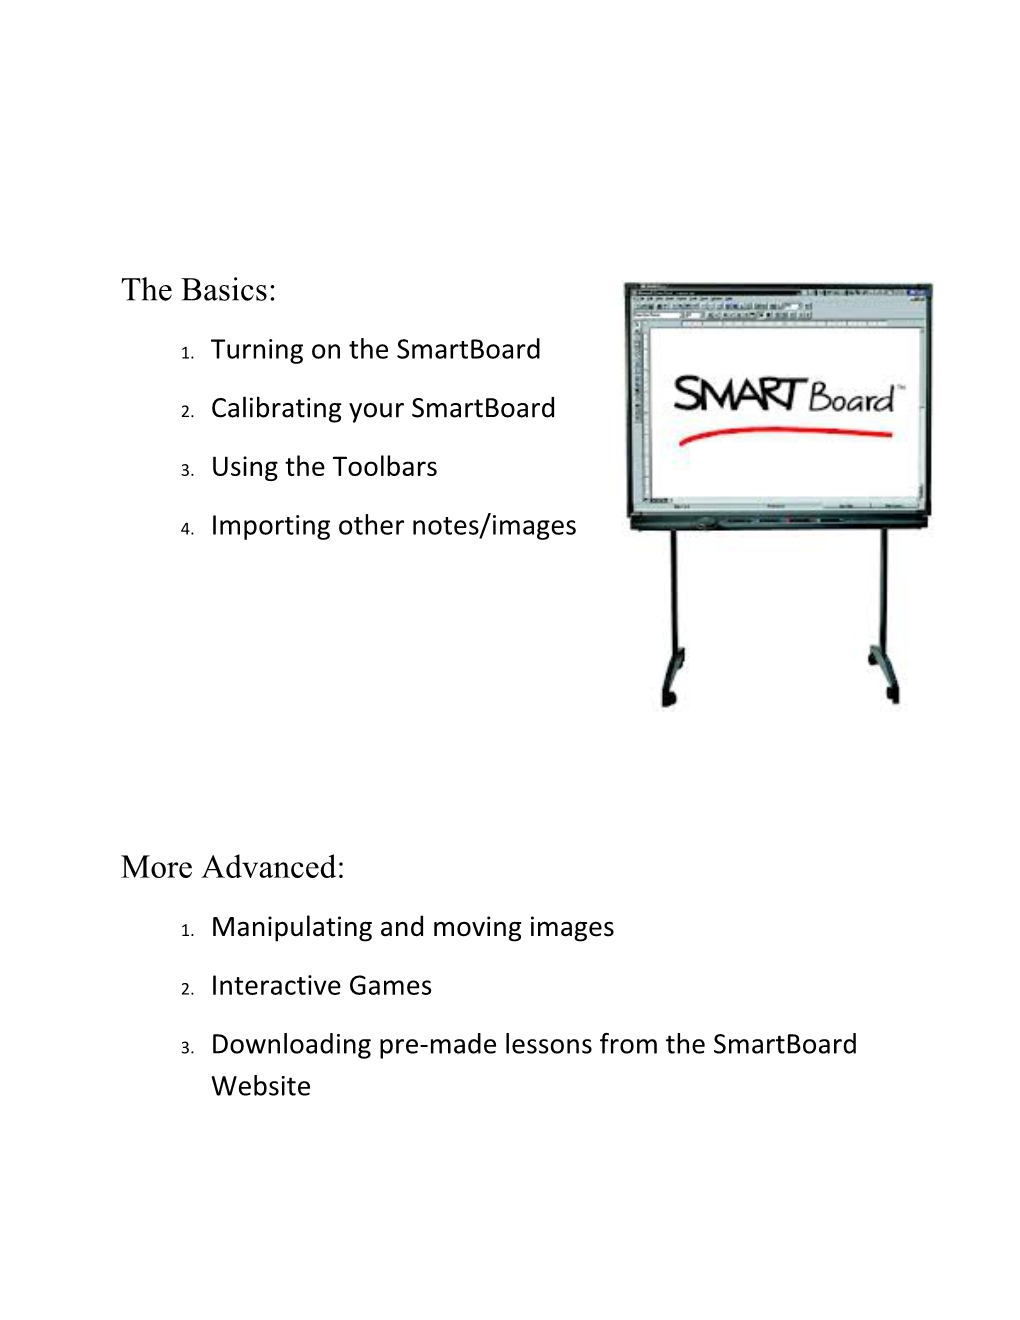 1. Turning on the Smartboard